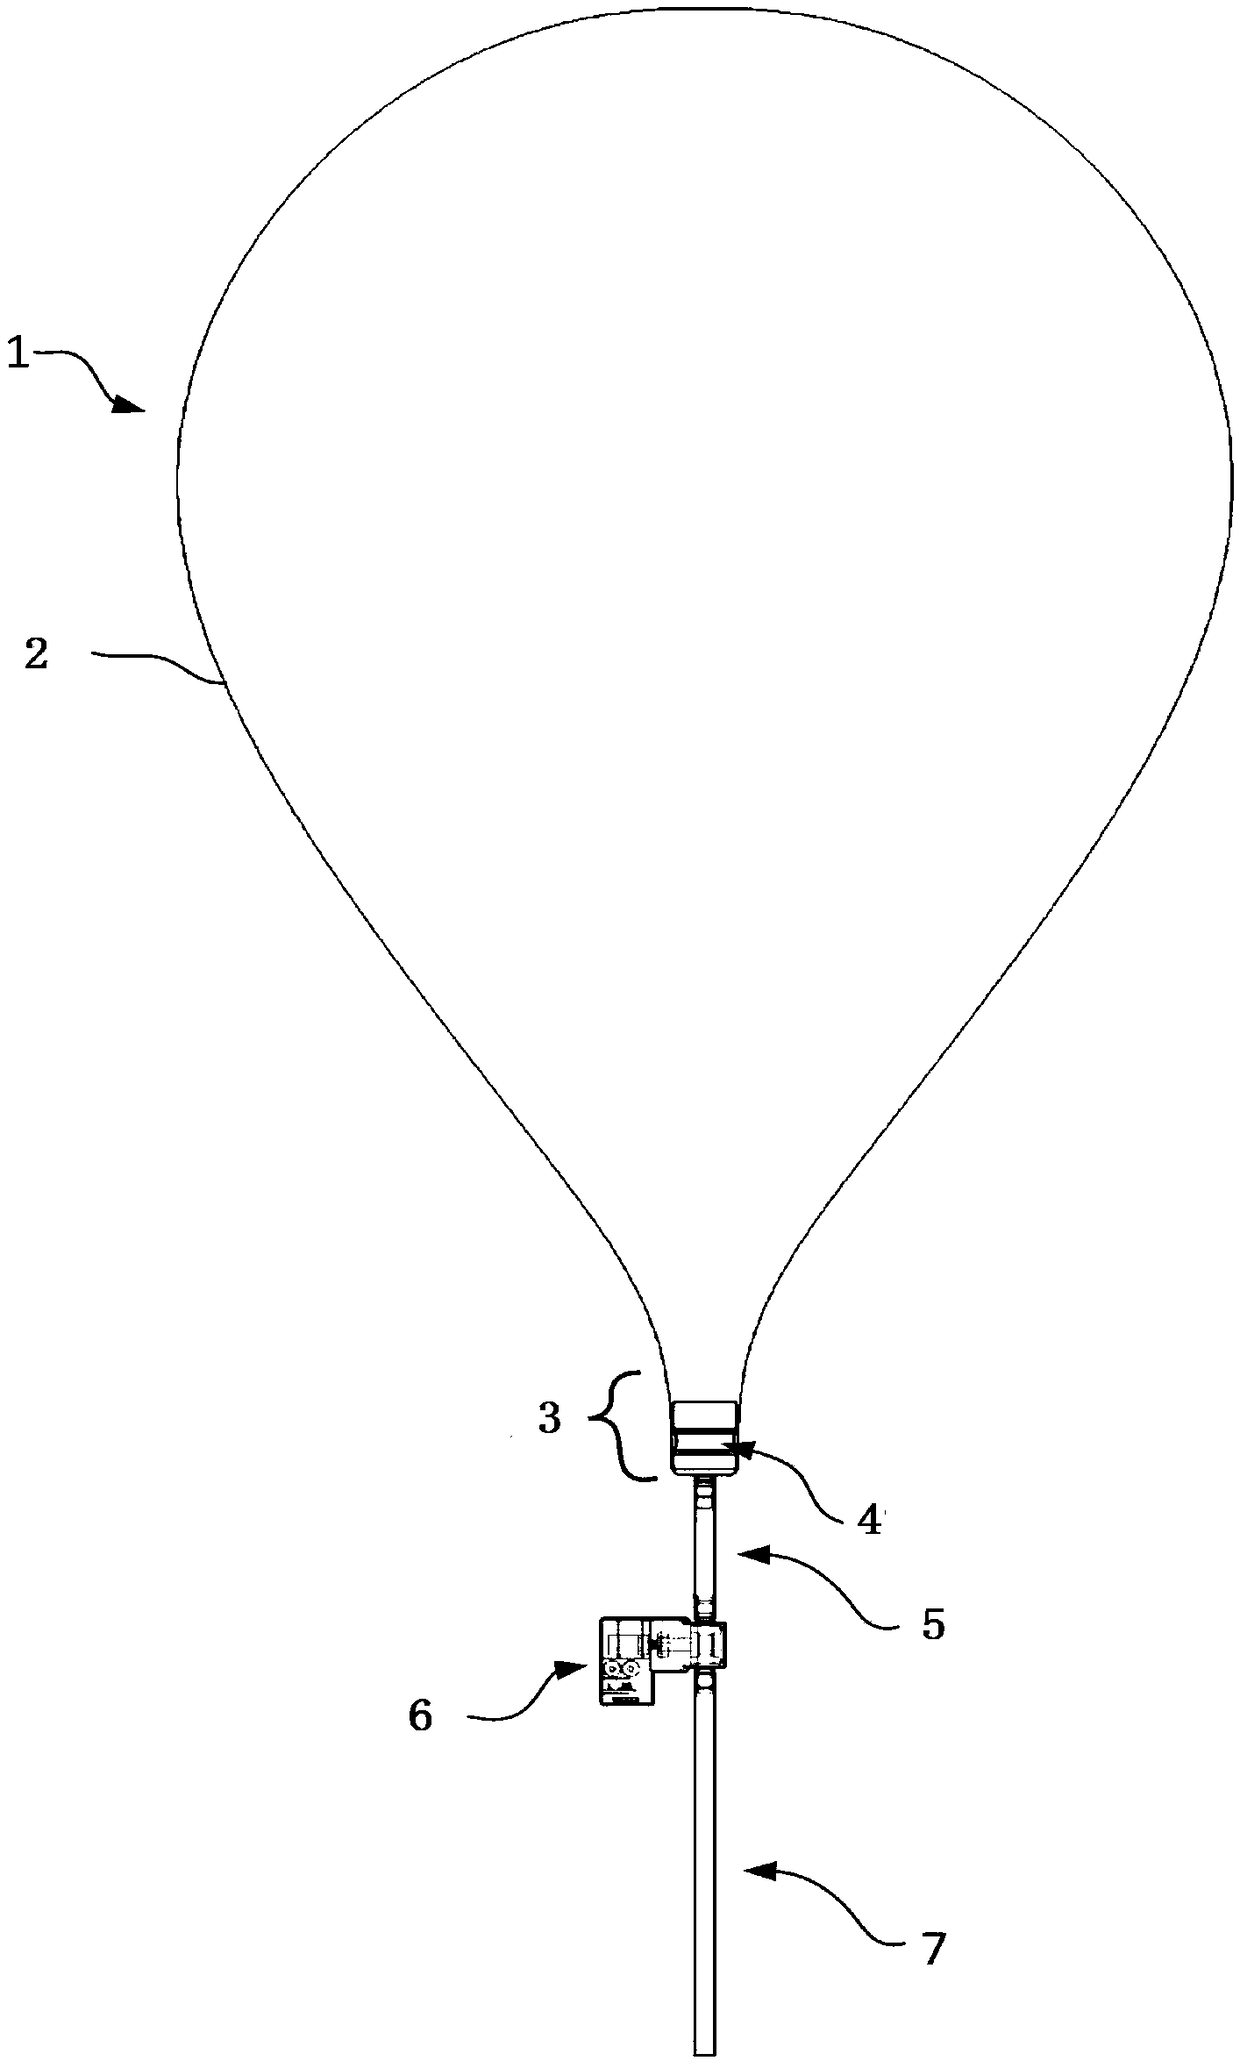 High-altitude latex horizontal moving sounding balloon